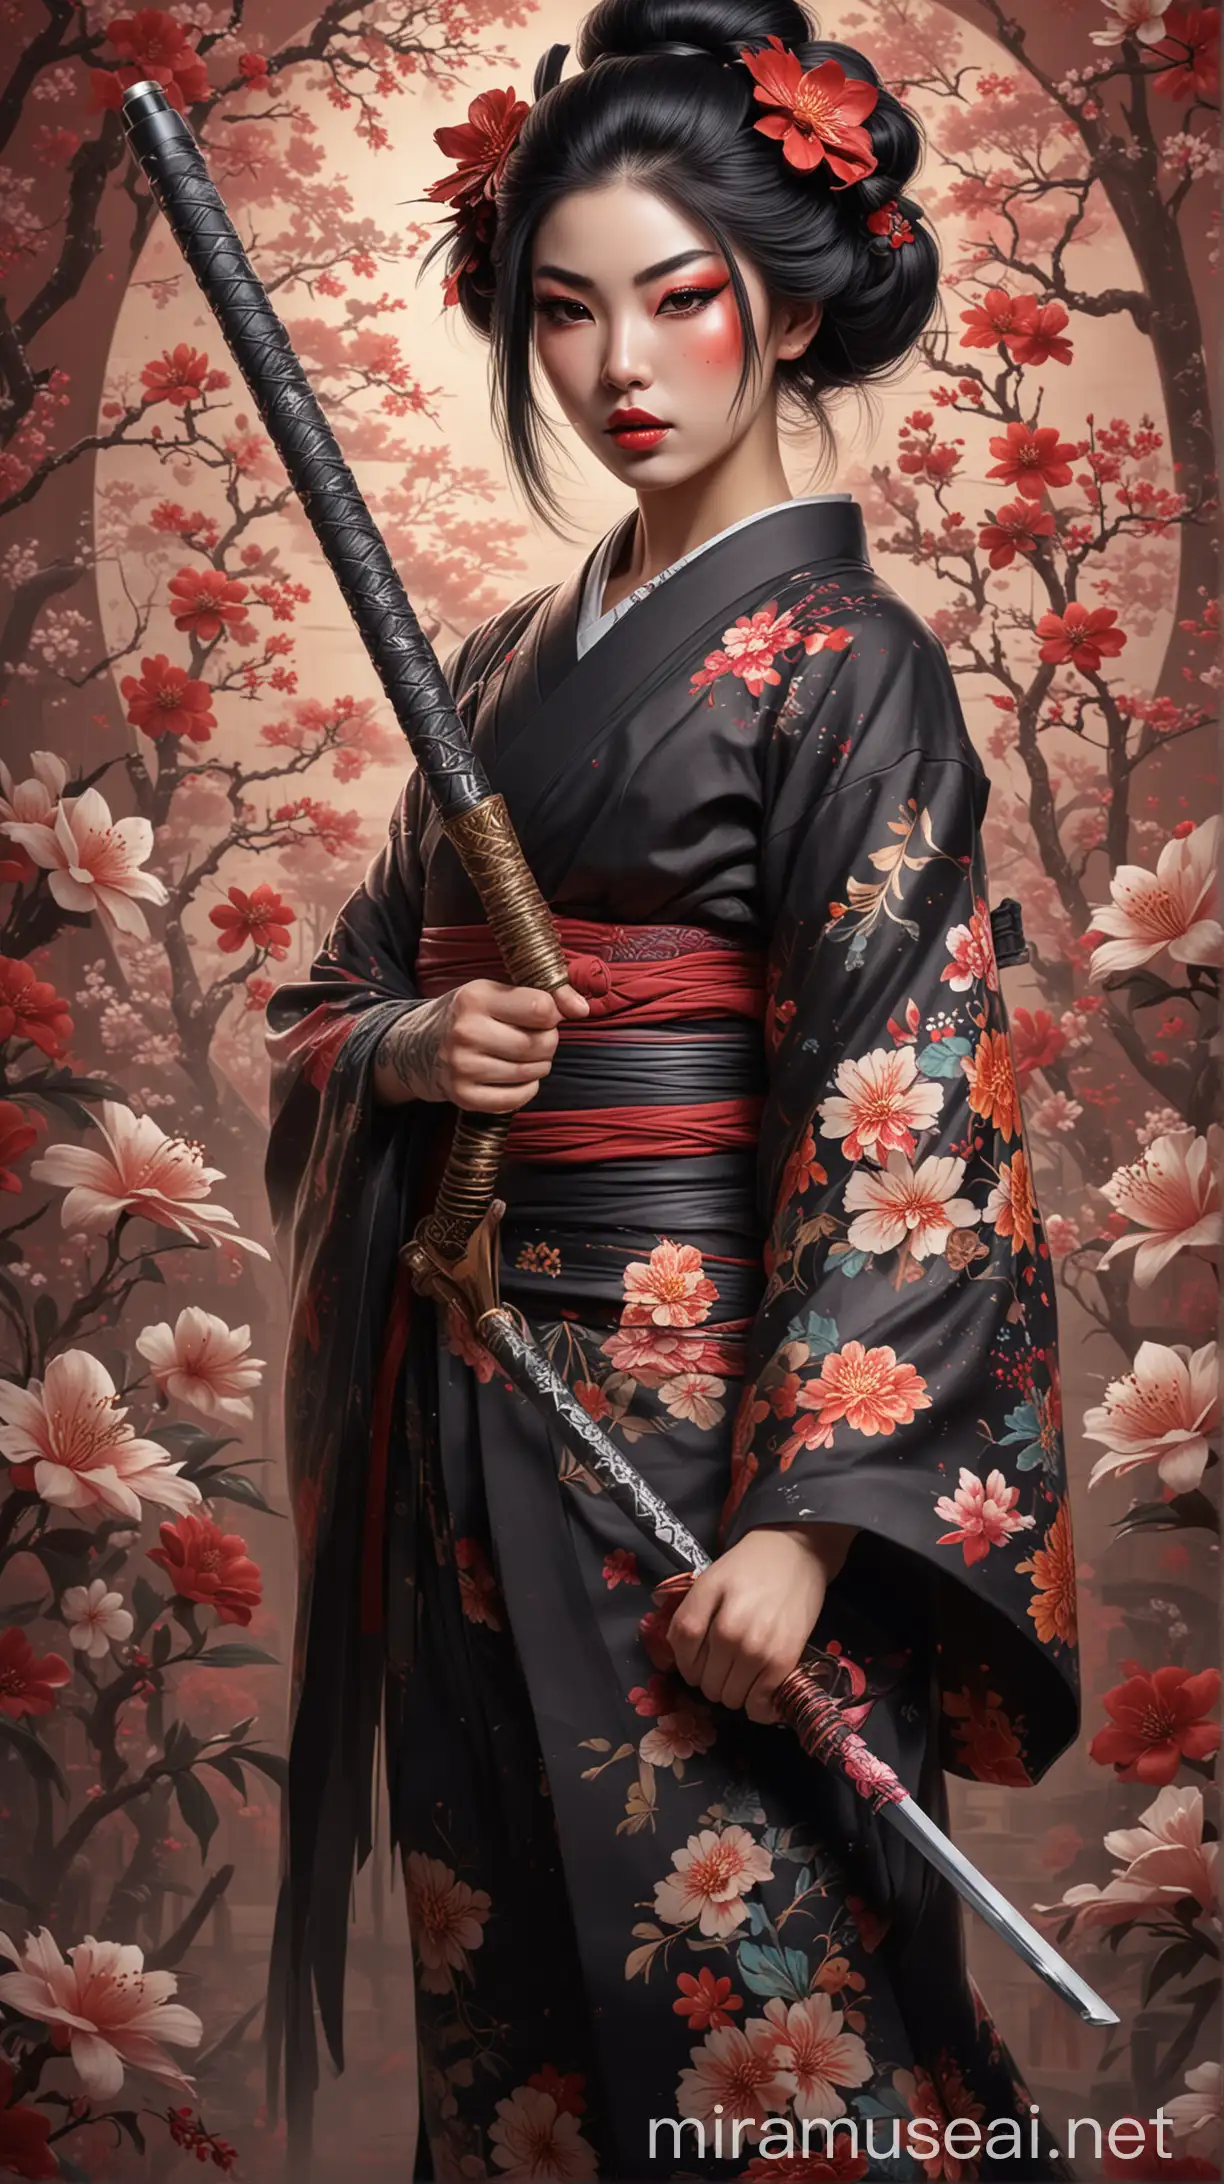 wanita geisha cantik dengan tato seluruh tubuh memegang pedang katana di artgerm, tato menutupi seluruh , wajah cantik, bibir penuh, dan rambut hitam panjang dikuncir. desain bunga berwarna-warni wallpaper bunga,latar belakang dalam gaya anime fantasi ilustrasion, --v 6.0 --gaya mentah - -s 130 --ar 35:64